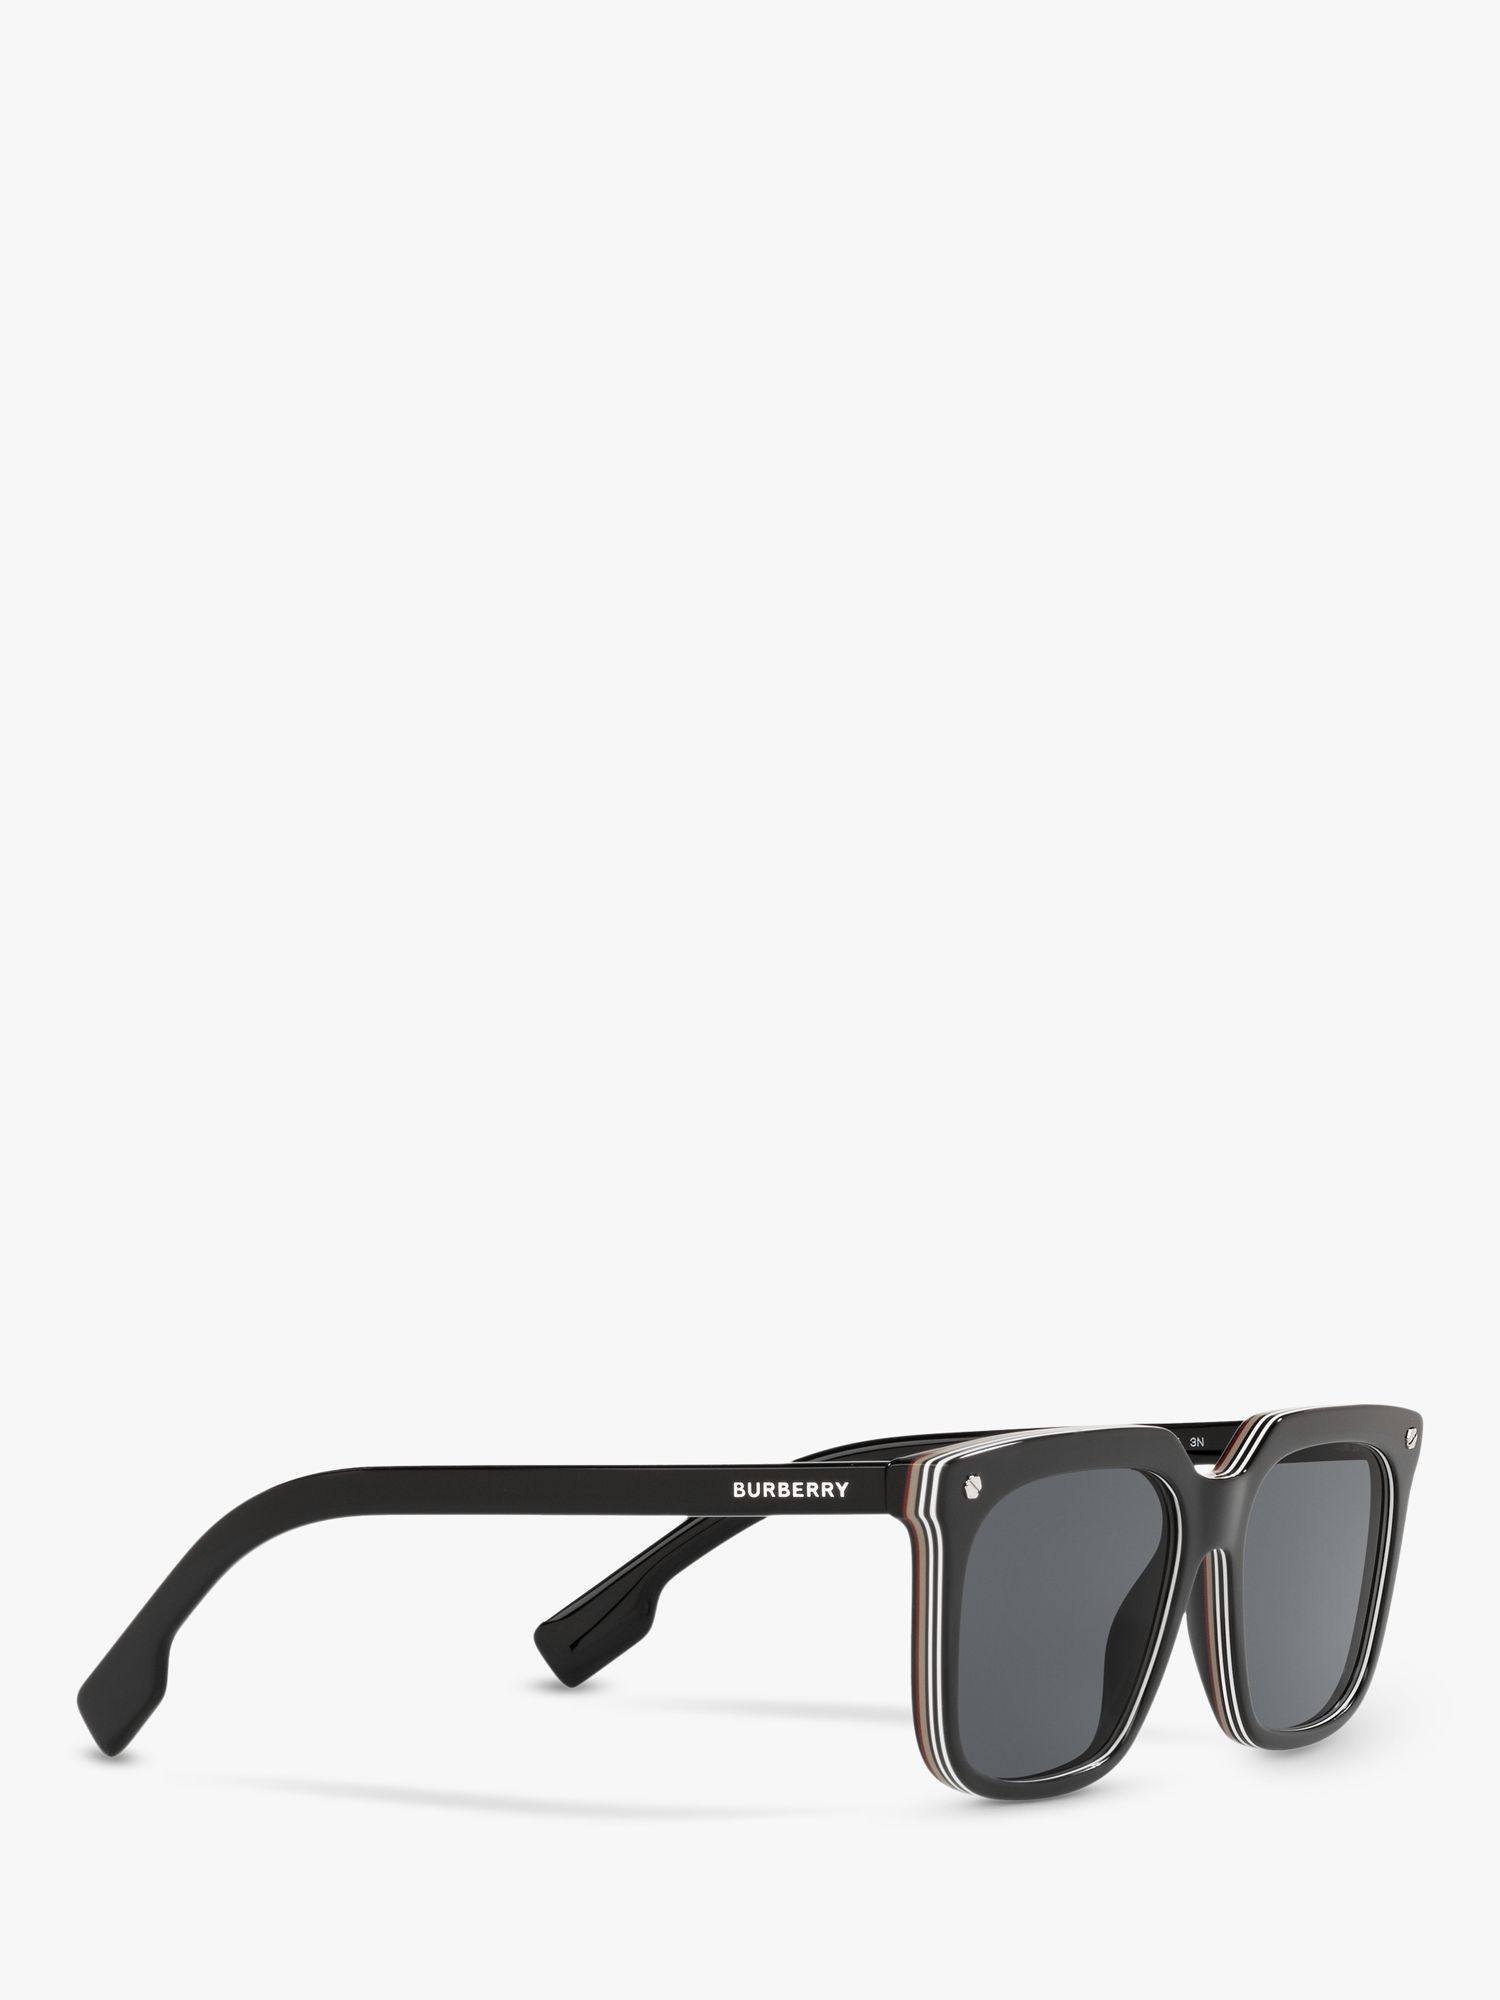 Men's Burberry Sunglasses | John Lewis & Partners